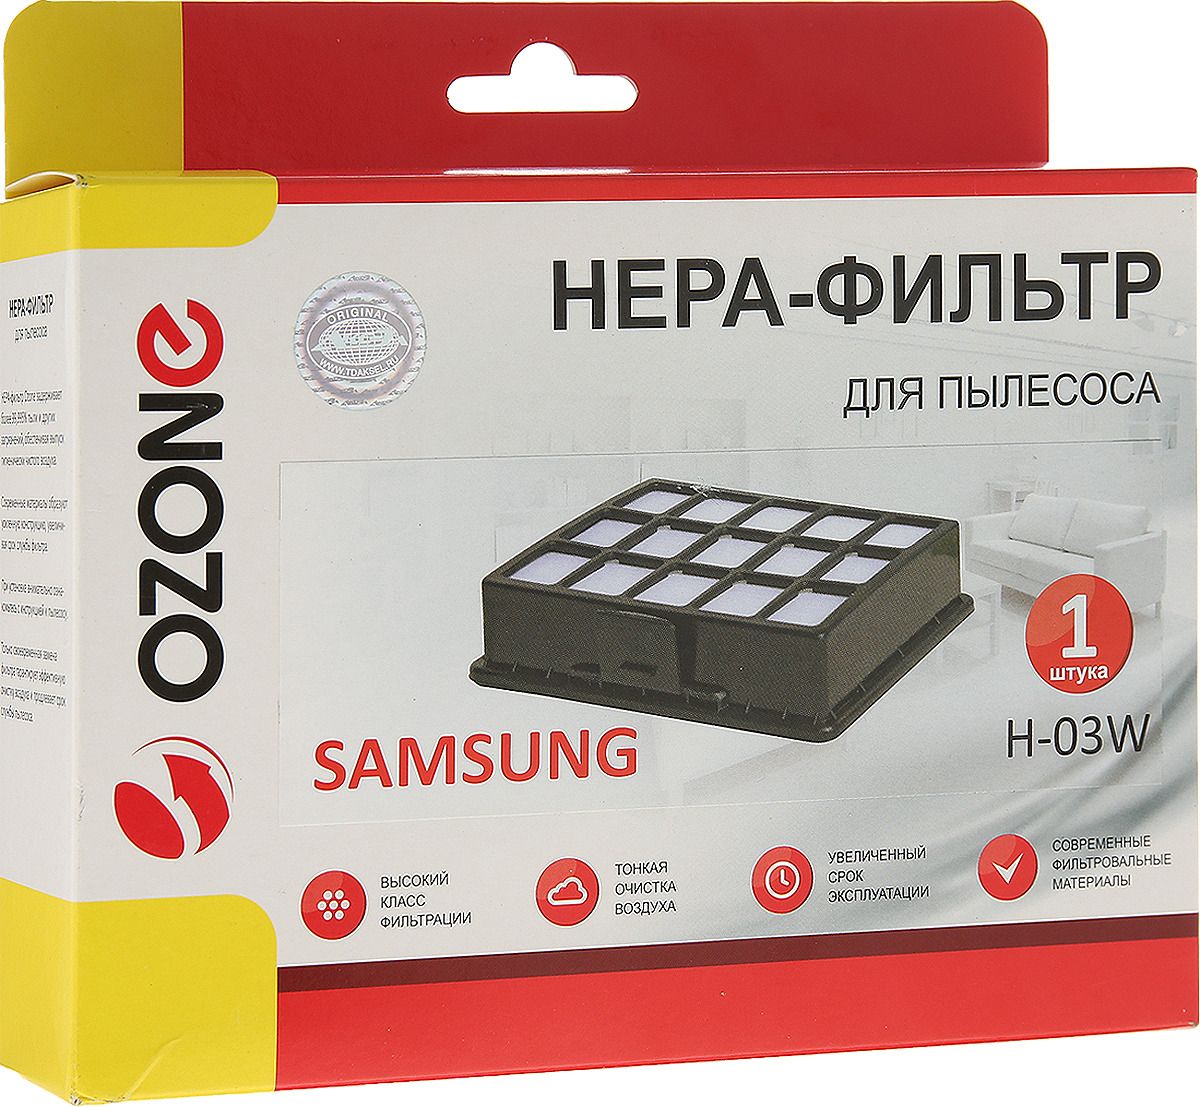 Ozone H-03W HEPA    Samsung